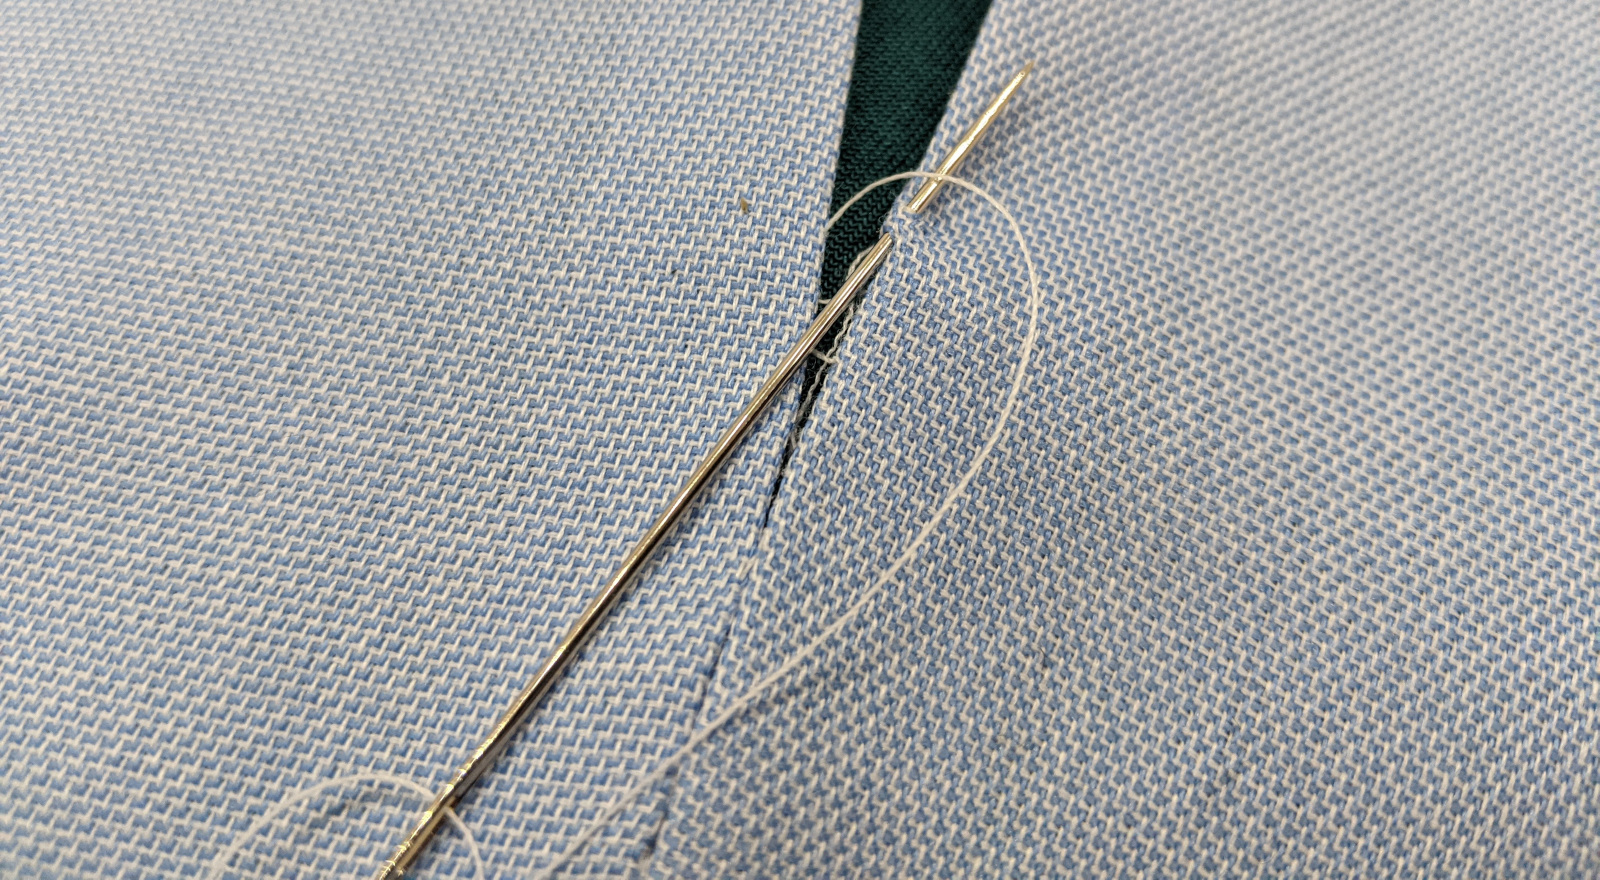 A closeup of a slipstitch being made on a seam